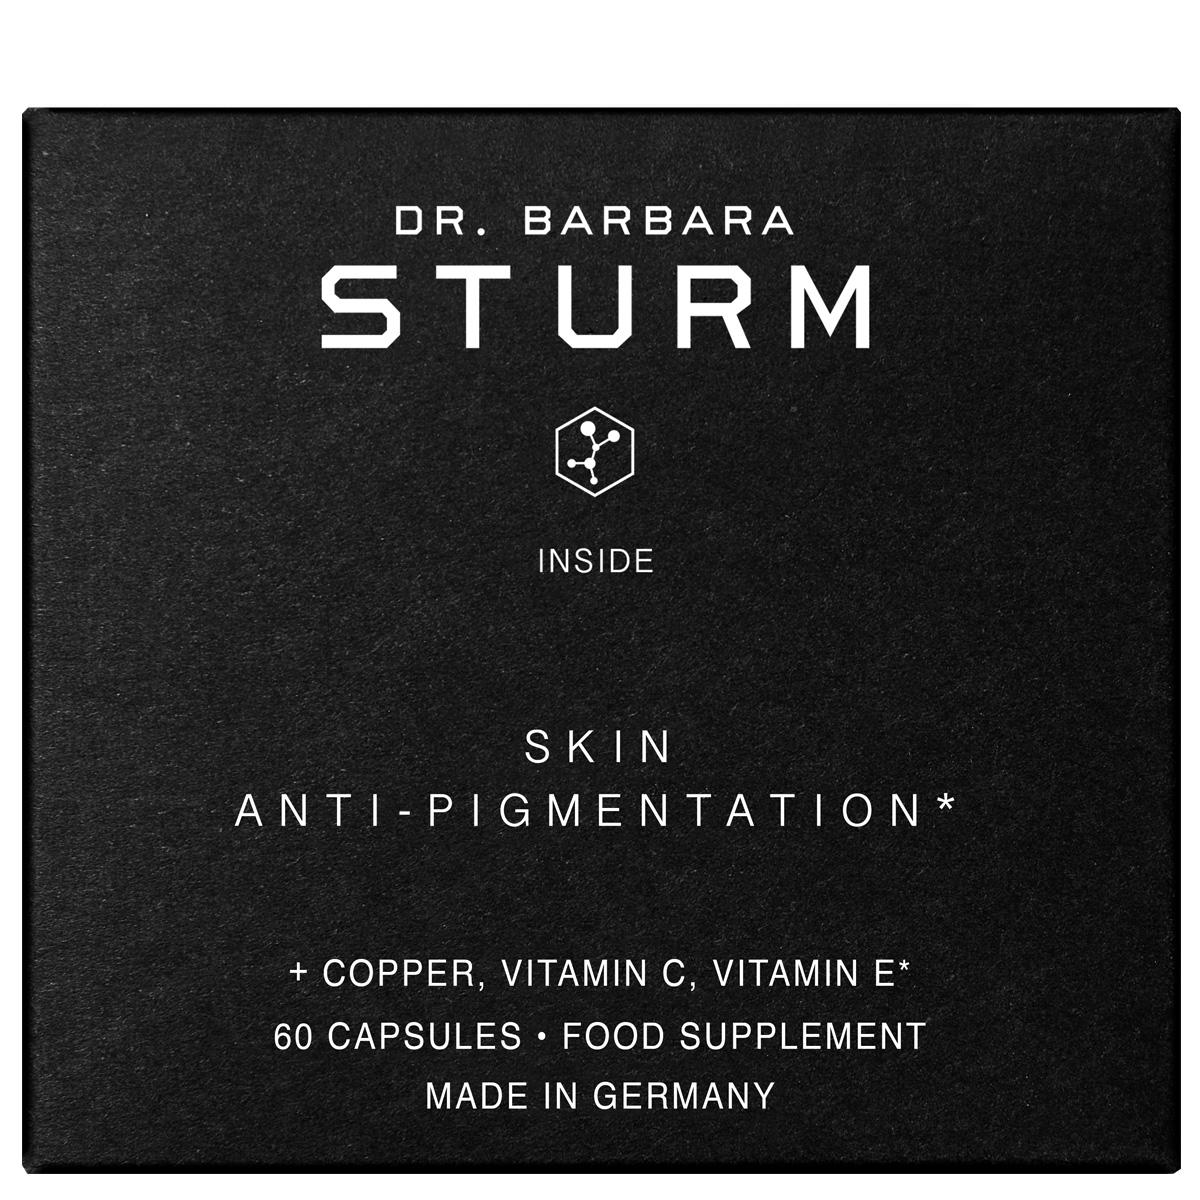 Dr. Barbara Sturm Skin Anti-Pigmentation* 60 Capsules 60 Stück pro Packung - 3